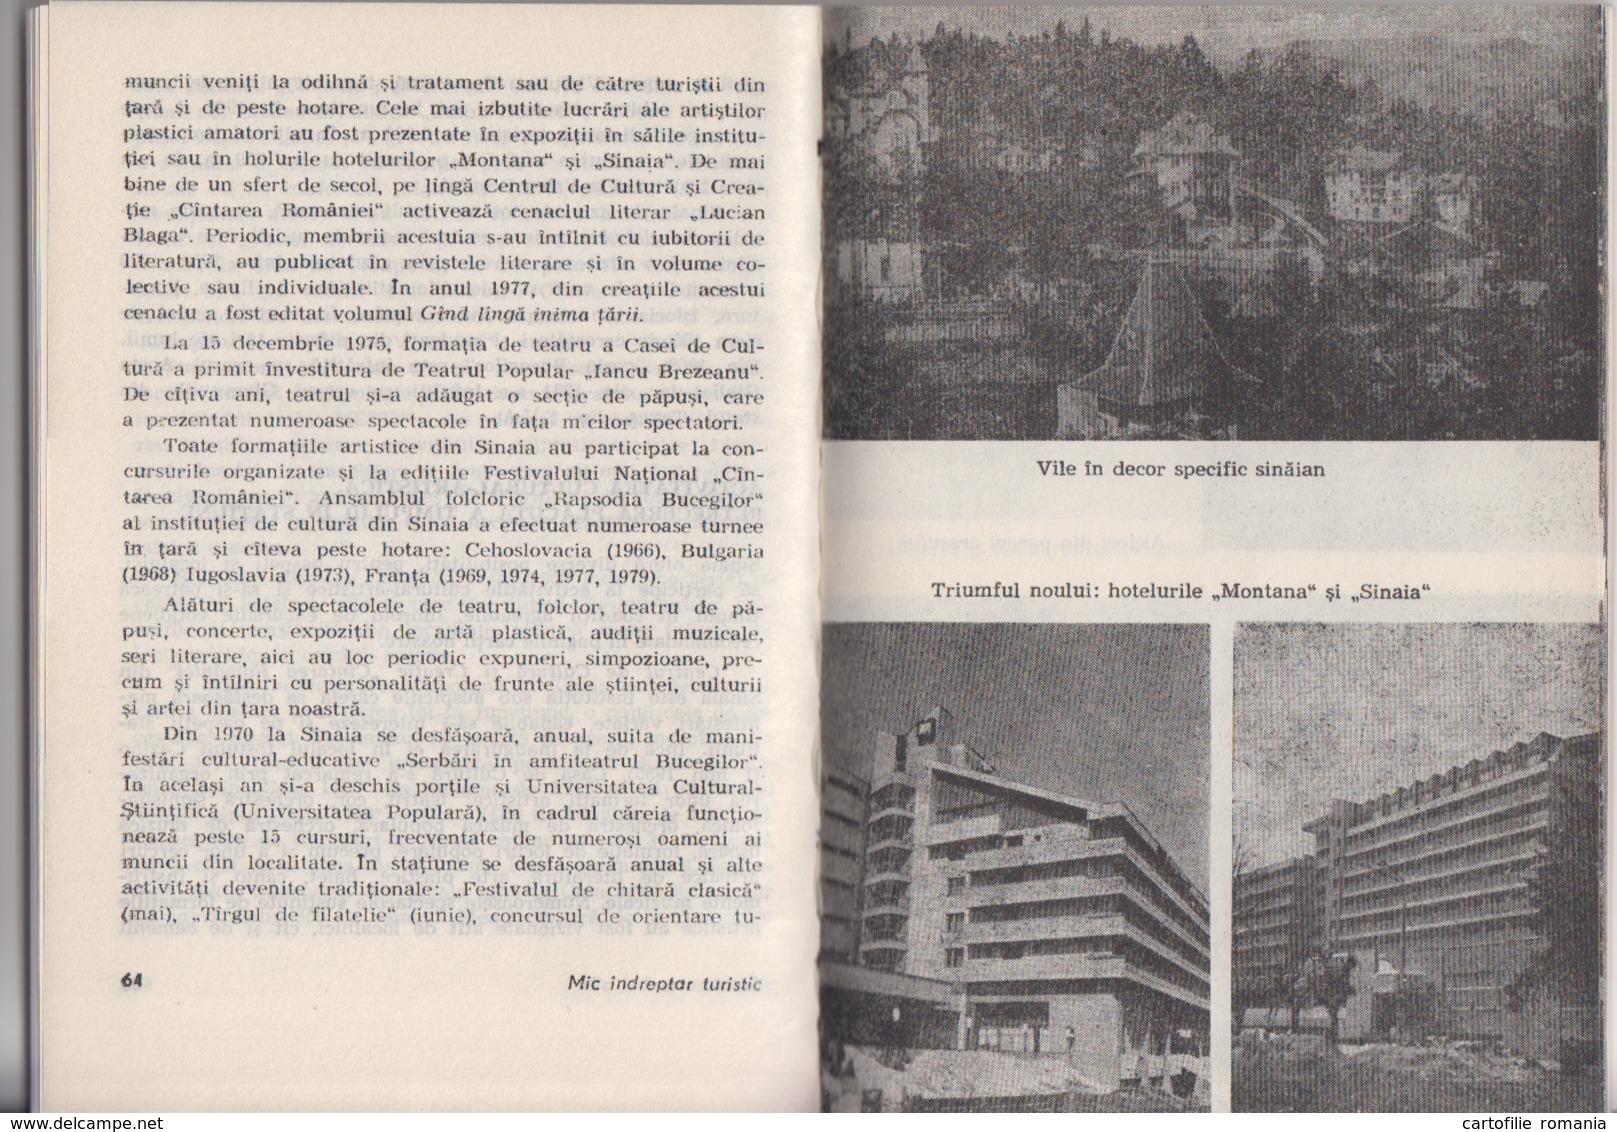 Romania - Sinaia - Tourist Guide Book - Railway Cable Car - Illustrated Edition - Bucuresti 1989 - 117 Pages - Toerisme